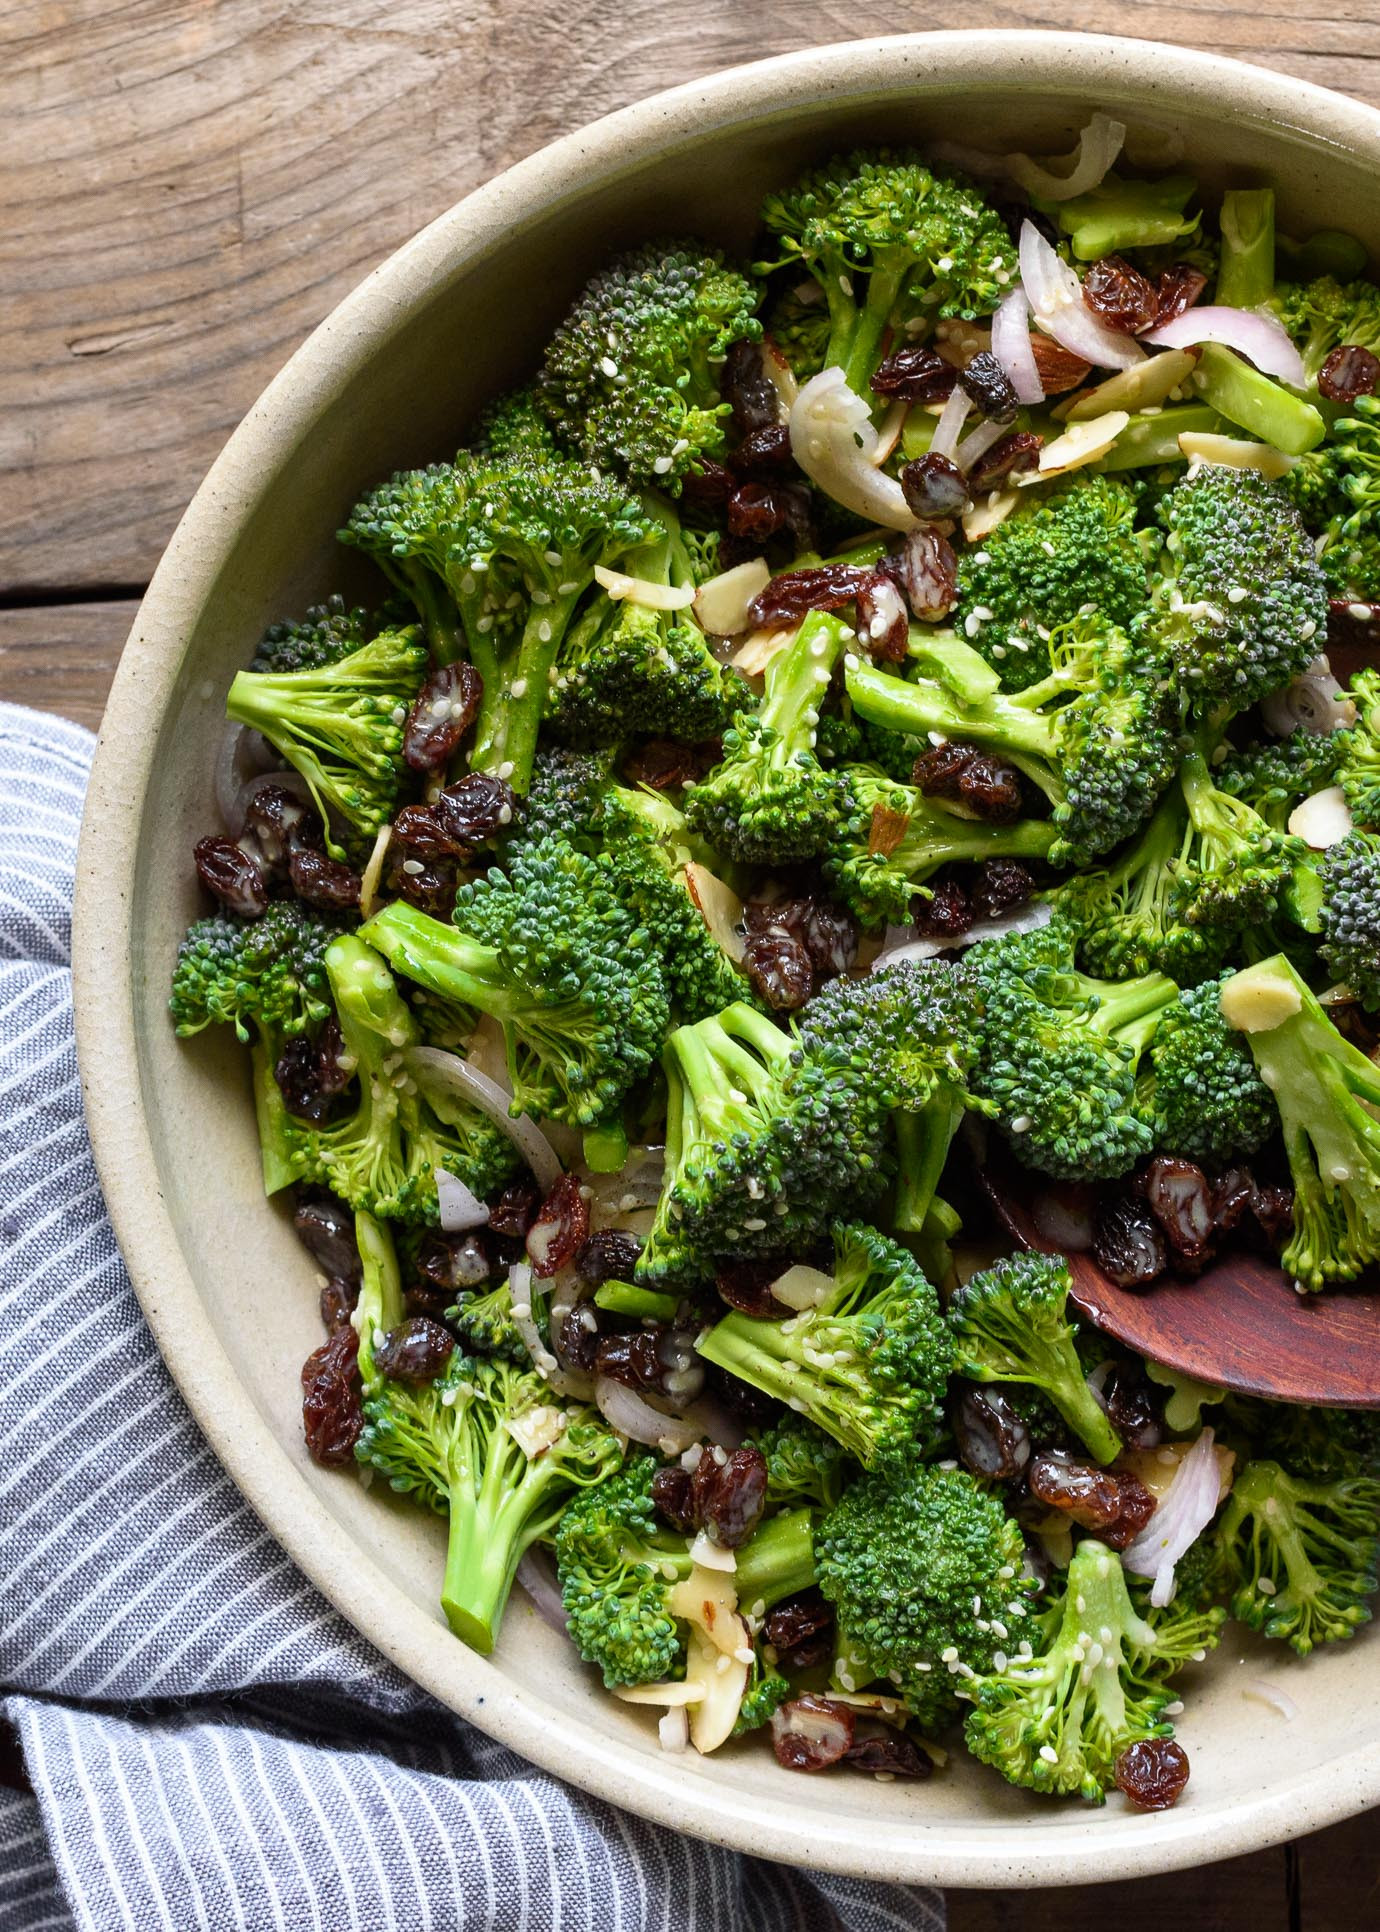 Broccoli Salad Healthy
 A Healthier Broccoli Salad with Lemon Tahini Dressing